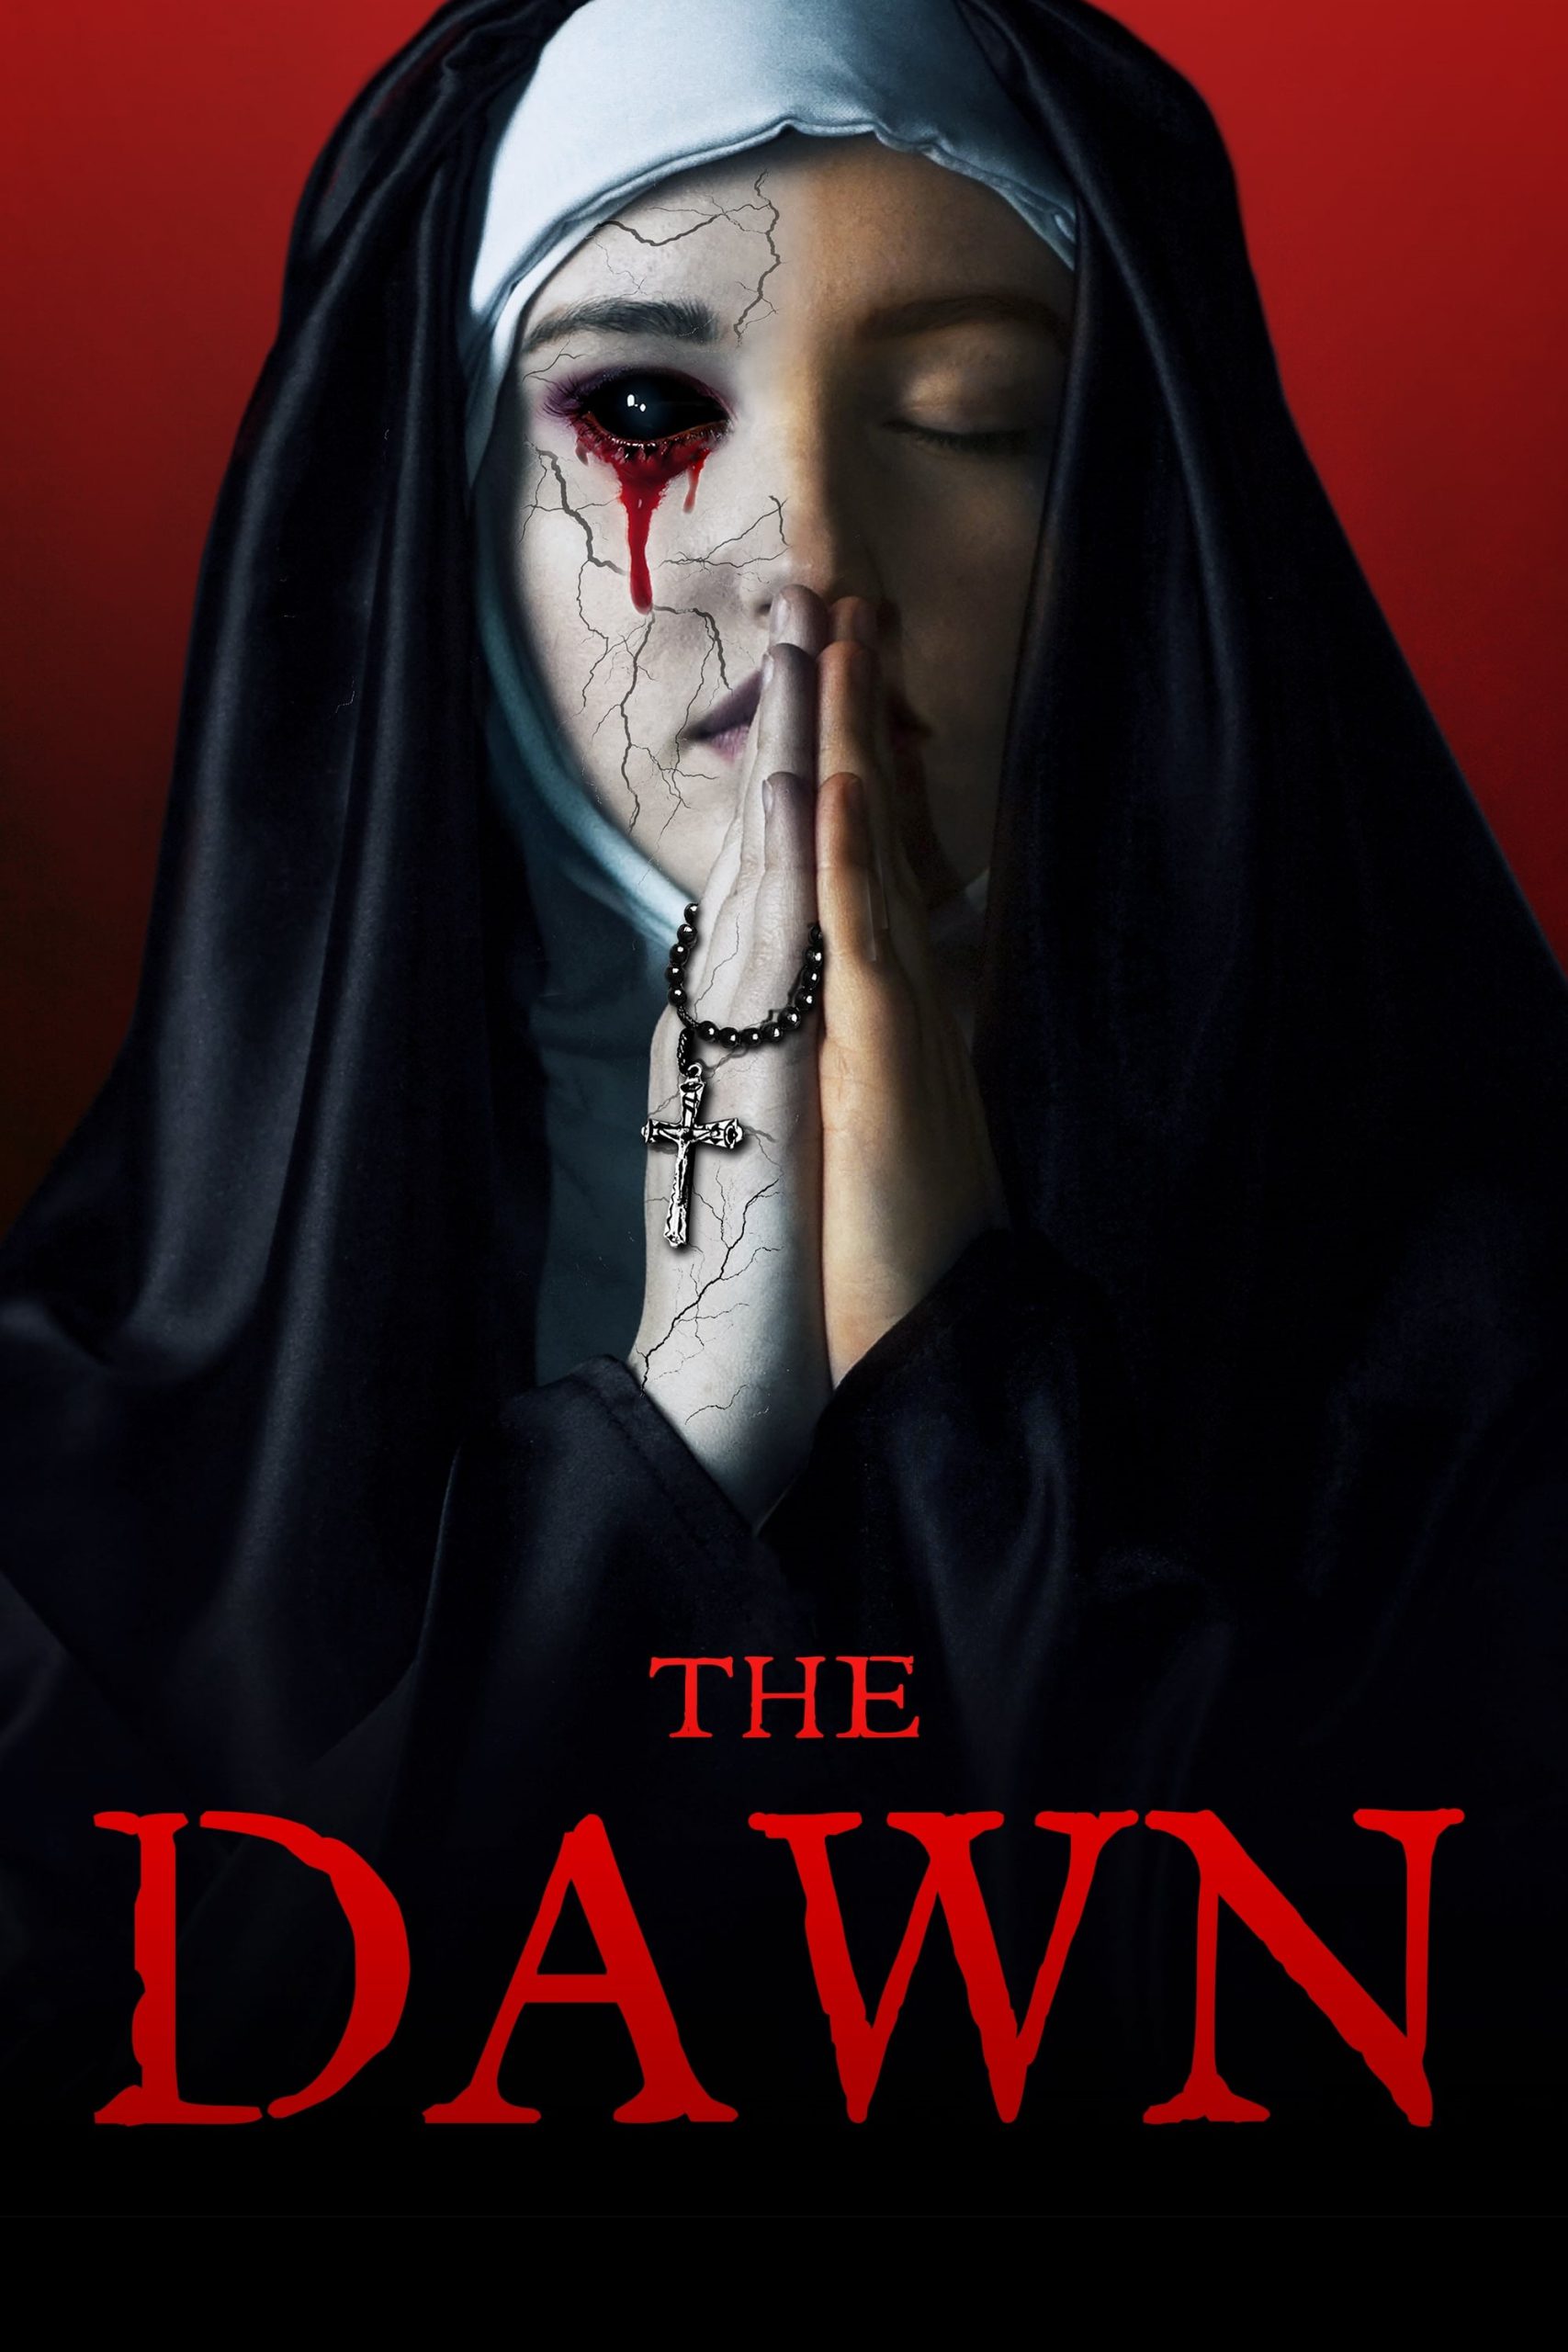 The Dawn [Sub-ITA] (2019)